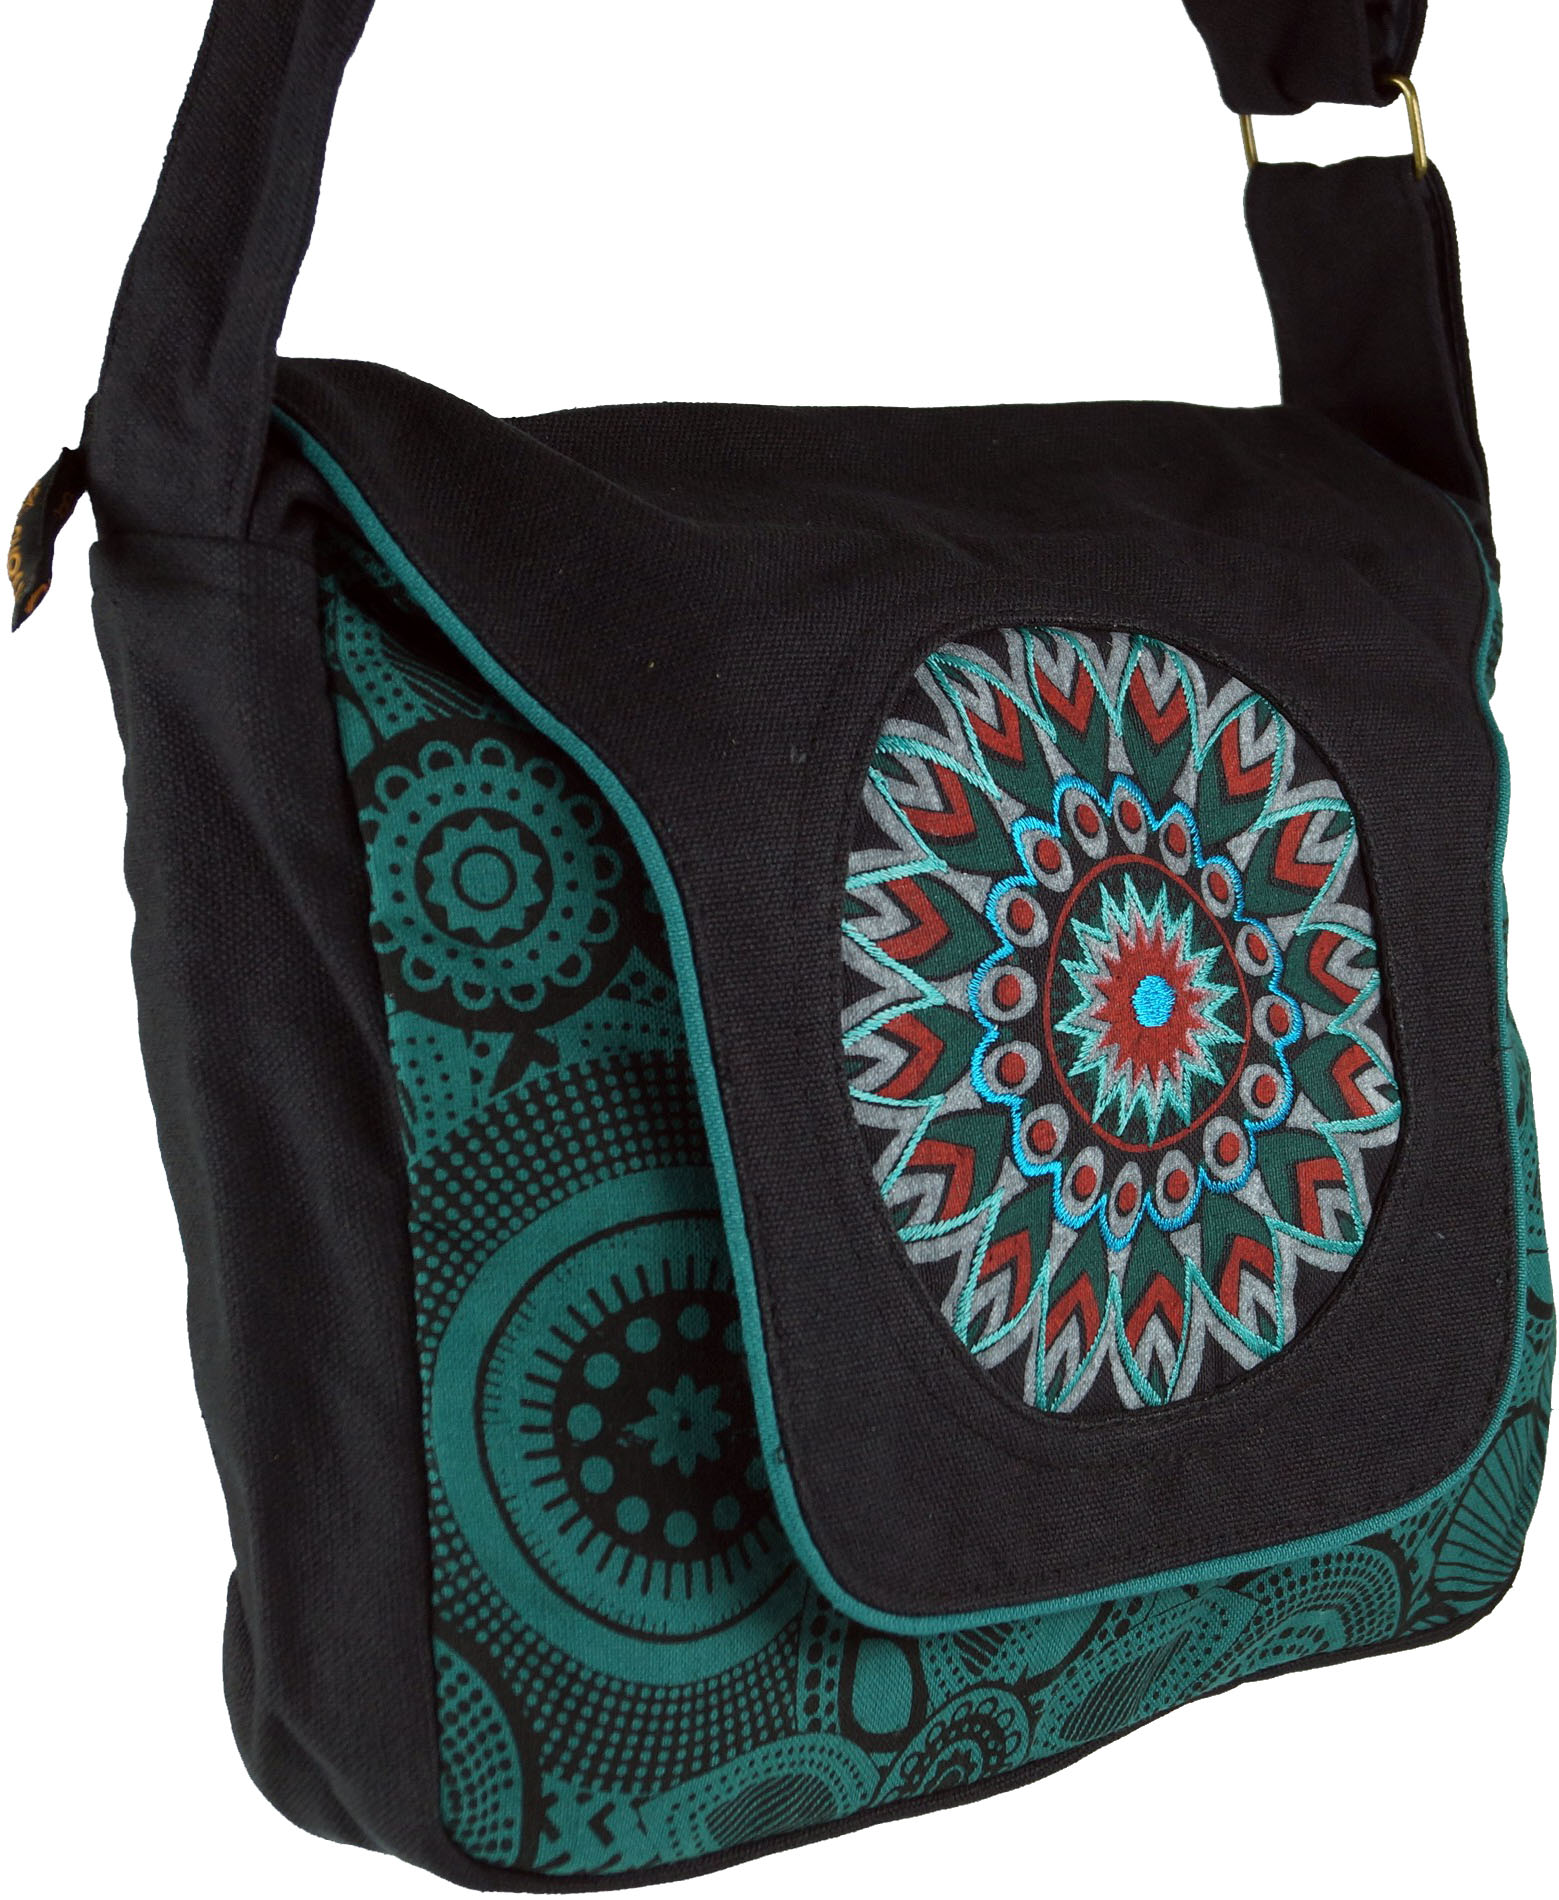 Kompakte Umhängetasche 3 Ethno Style Boho Goa Festival Shopper Beutel Hippie Bag 